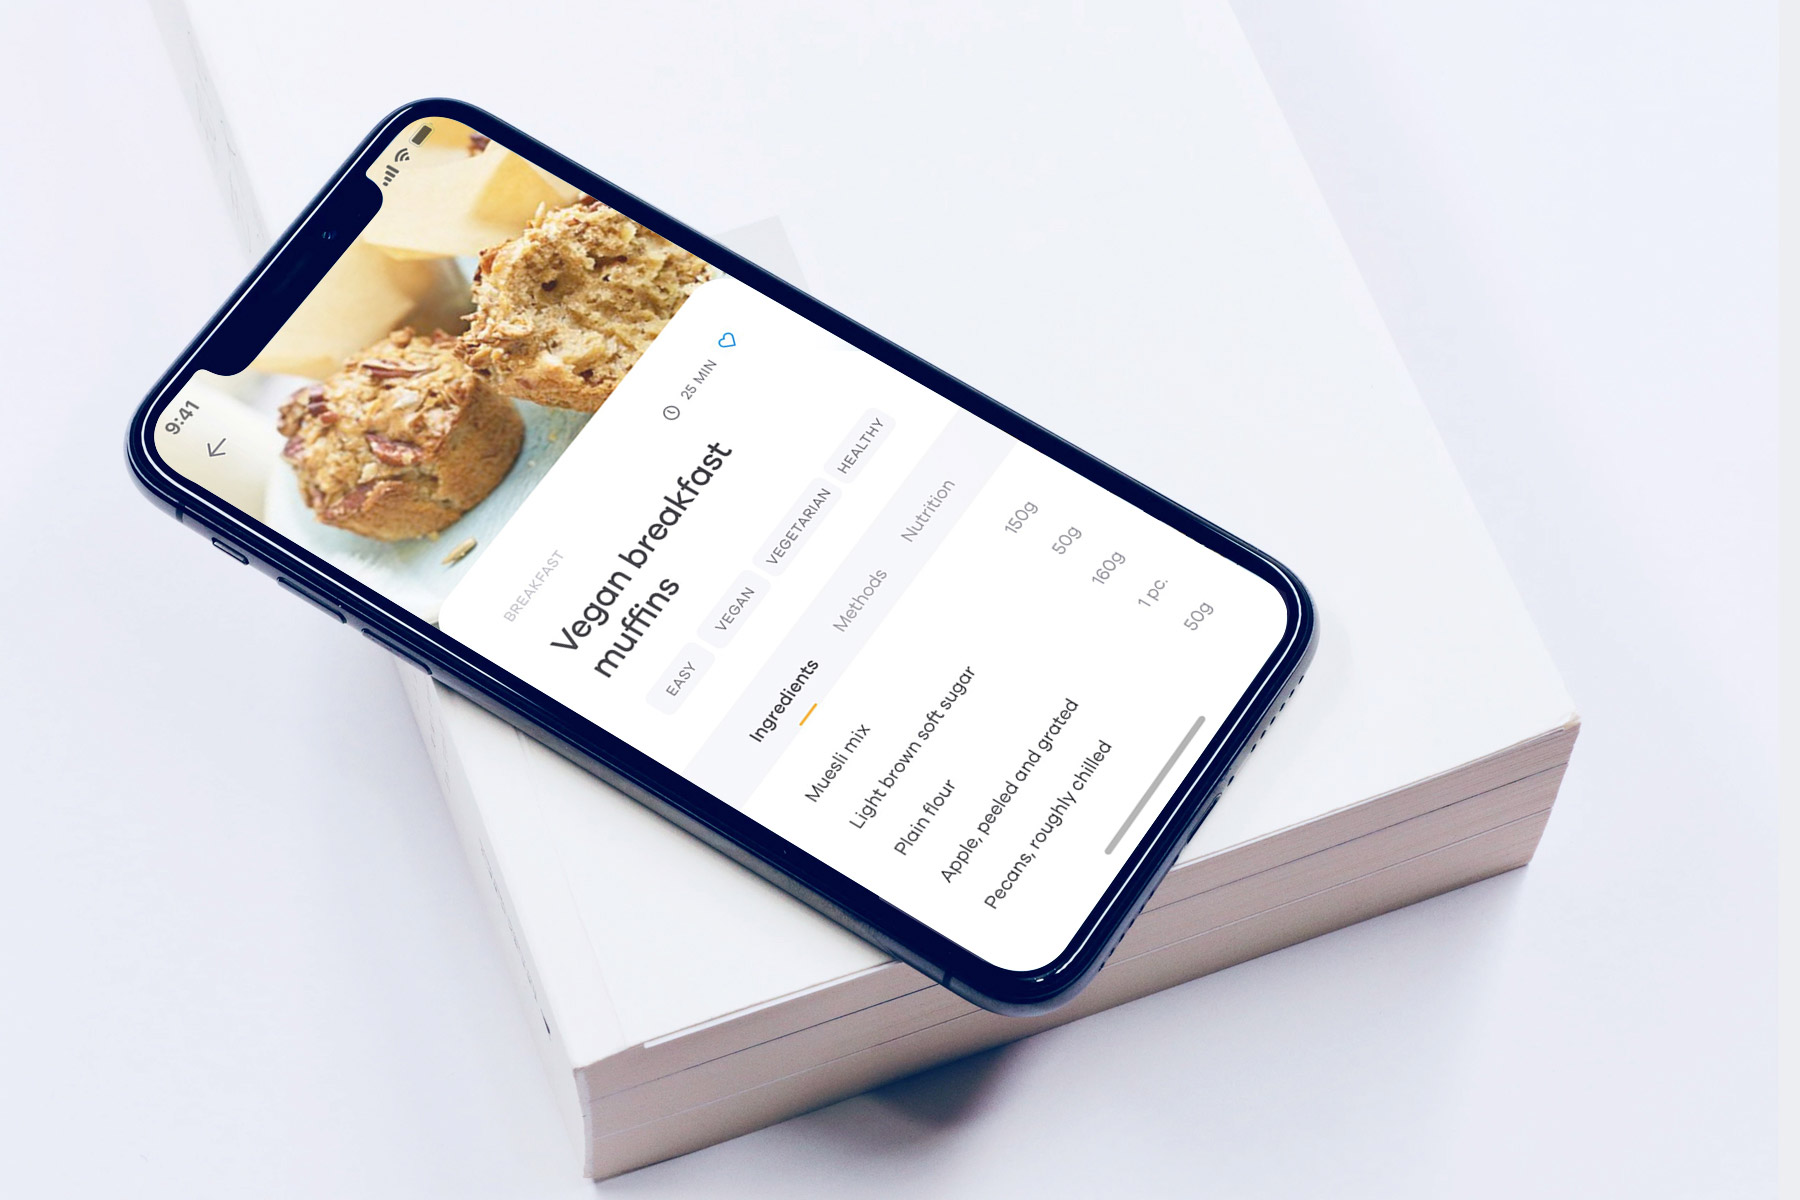 foodrush vegan breakfast muffins recipe screen on iPhone